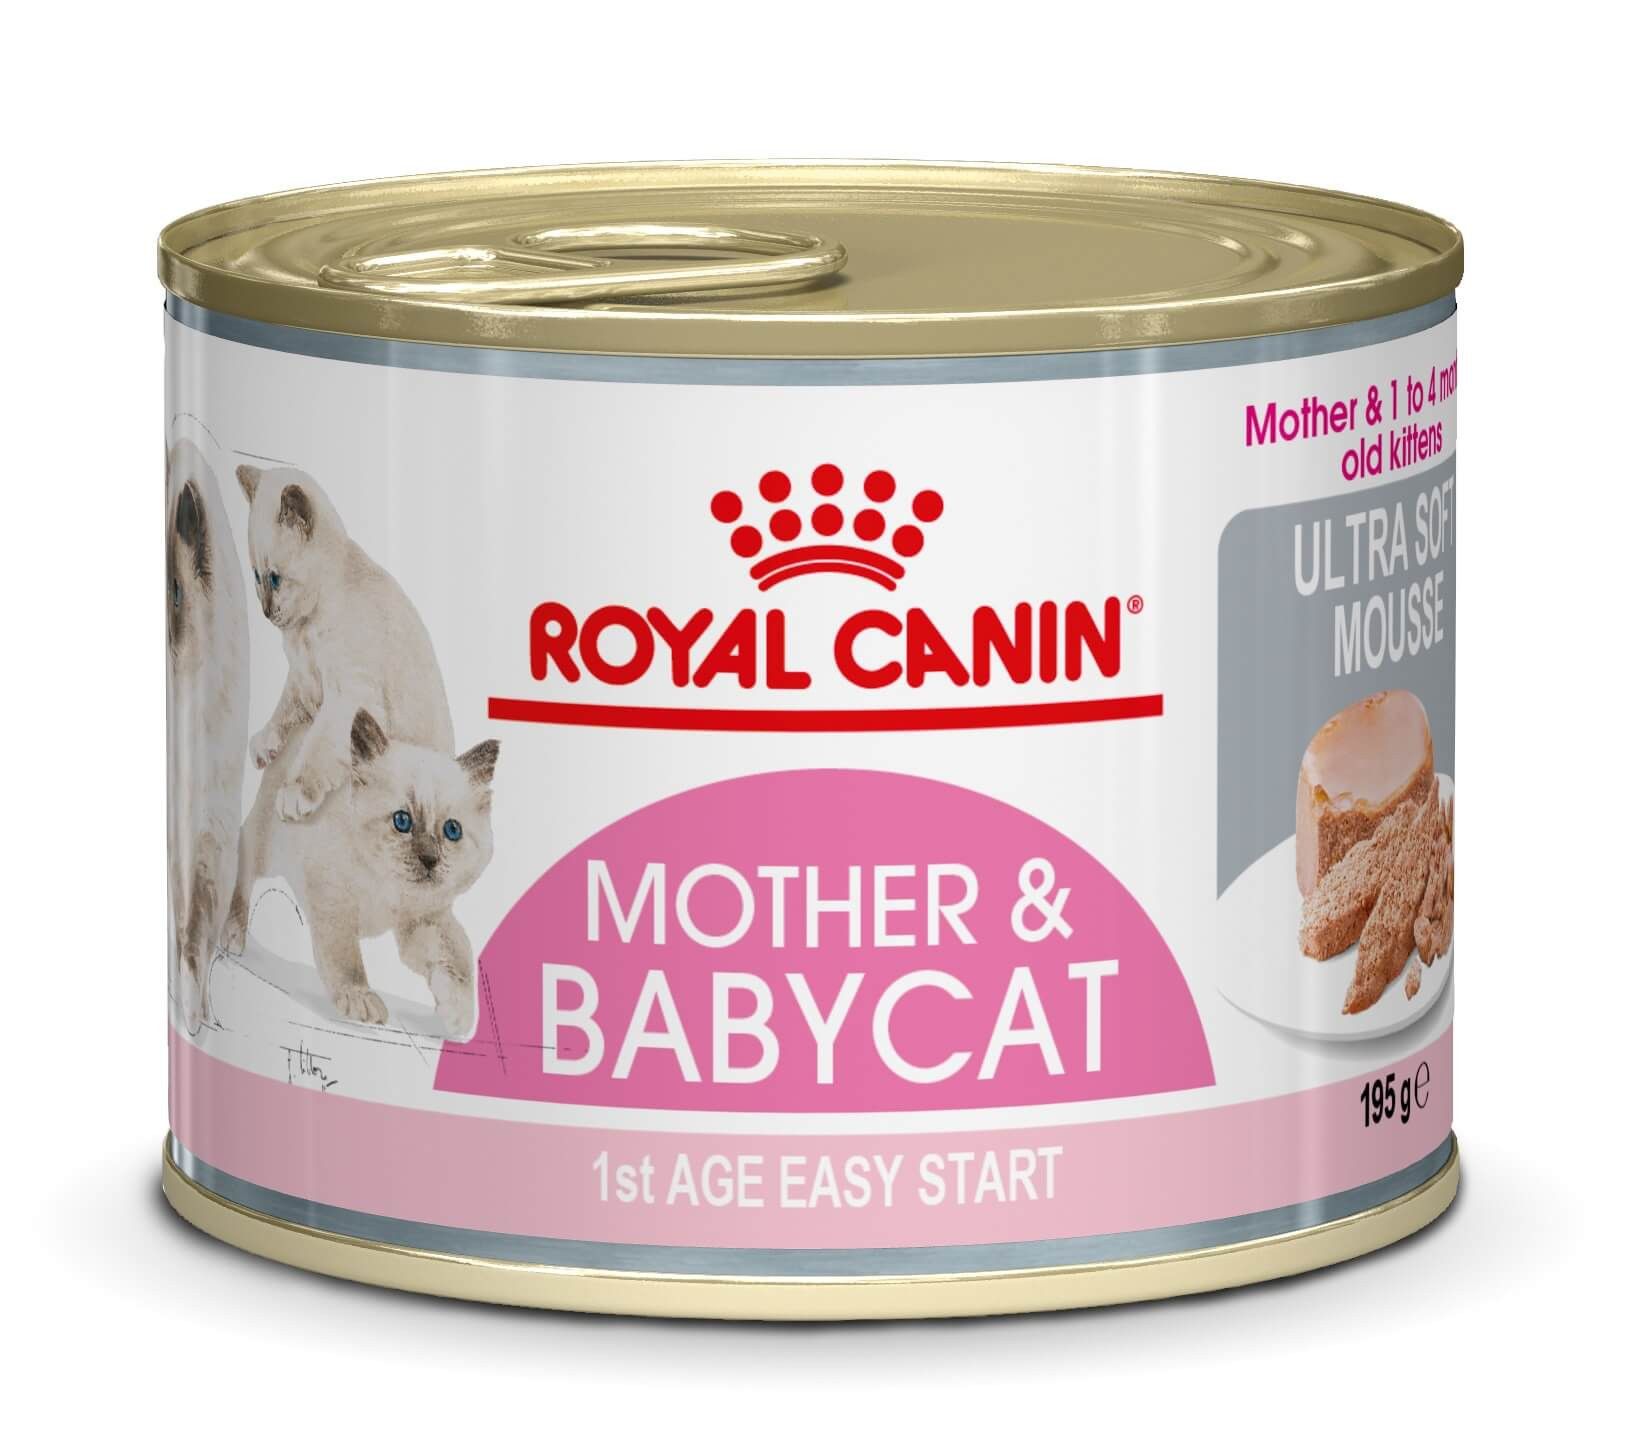 Royal Canin Mother & Babycat Mousse våtfoder